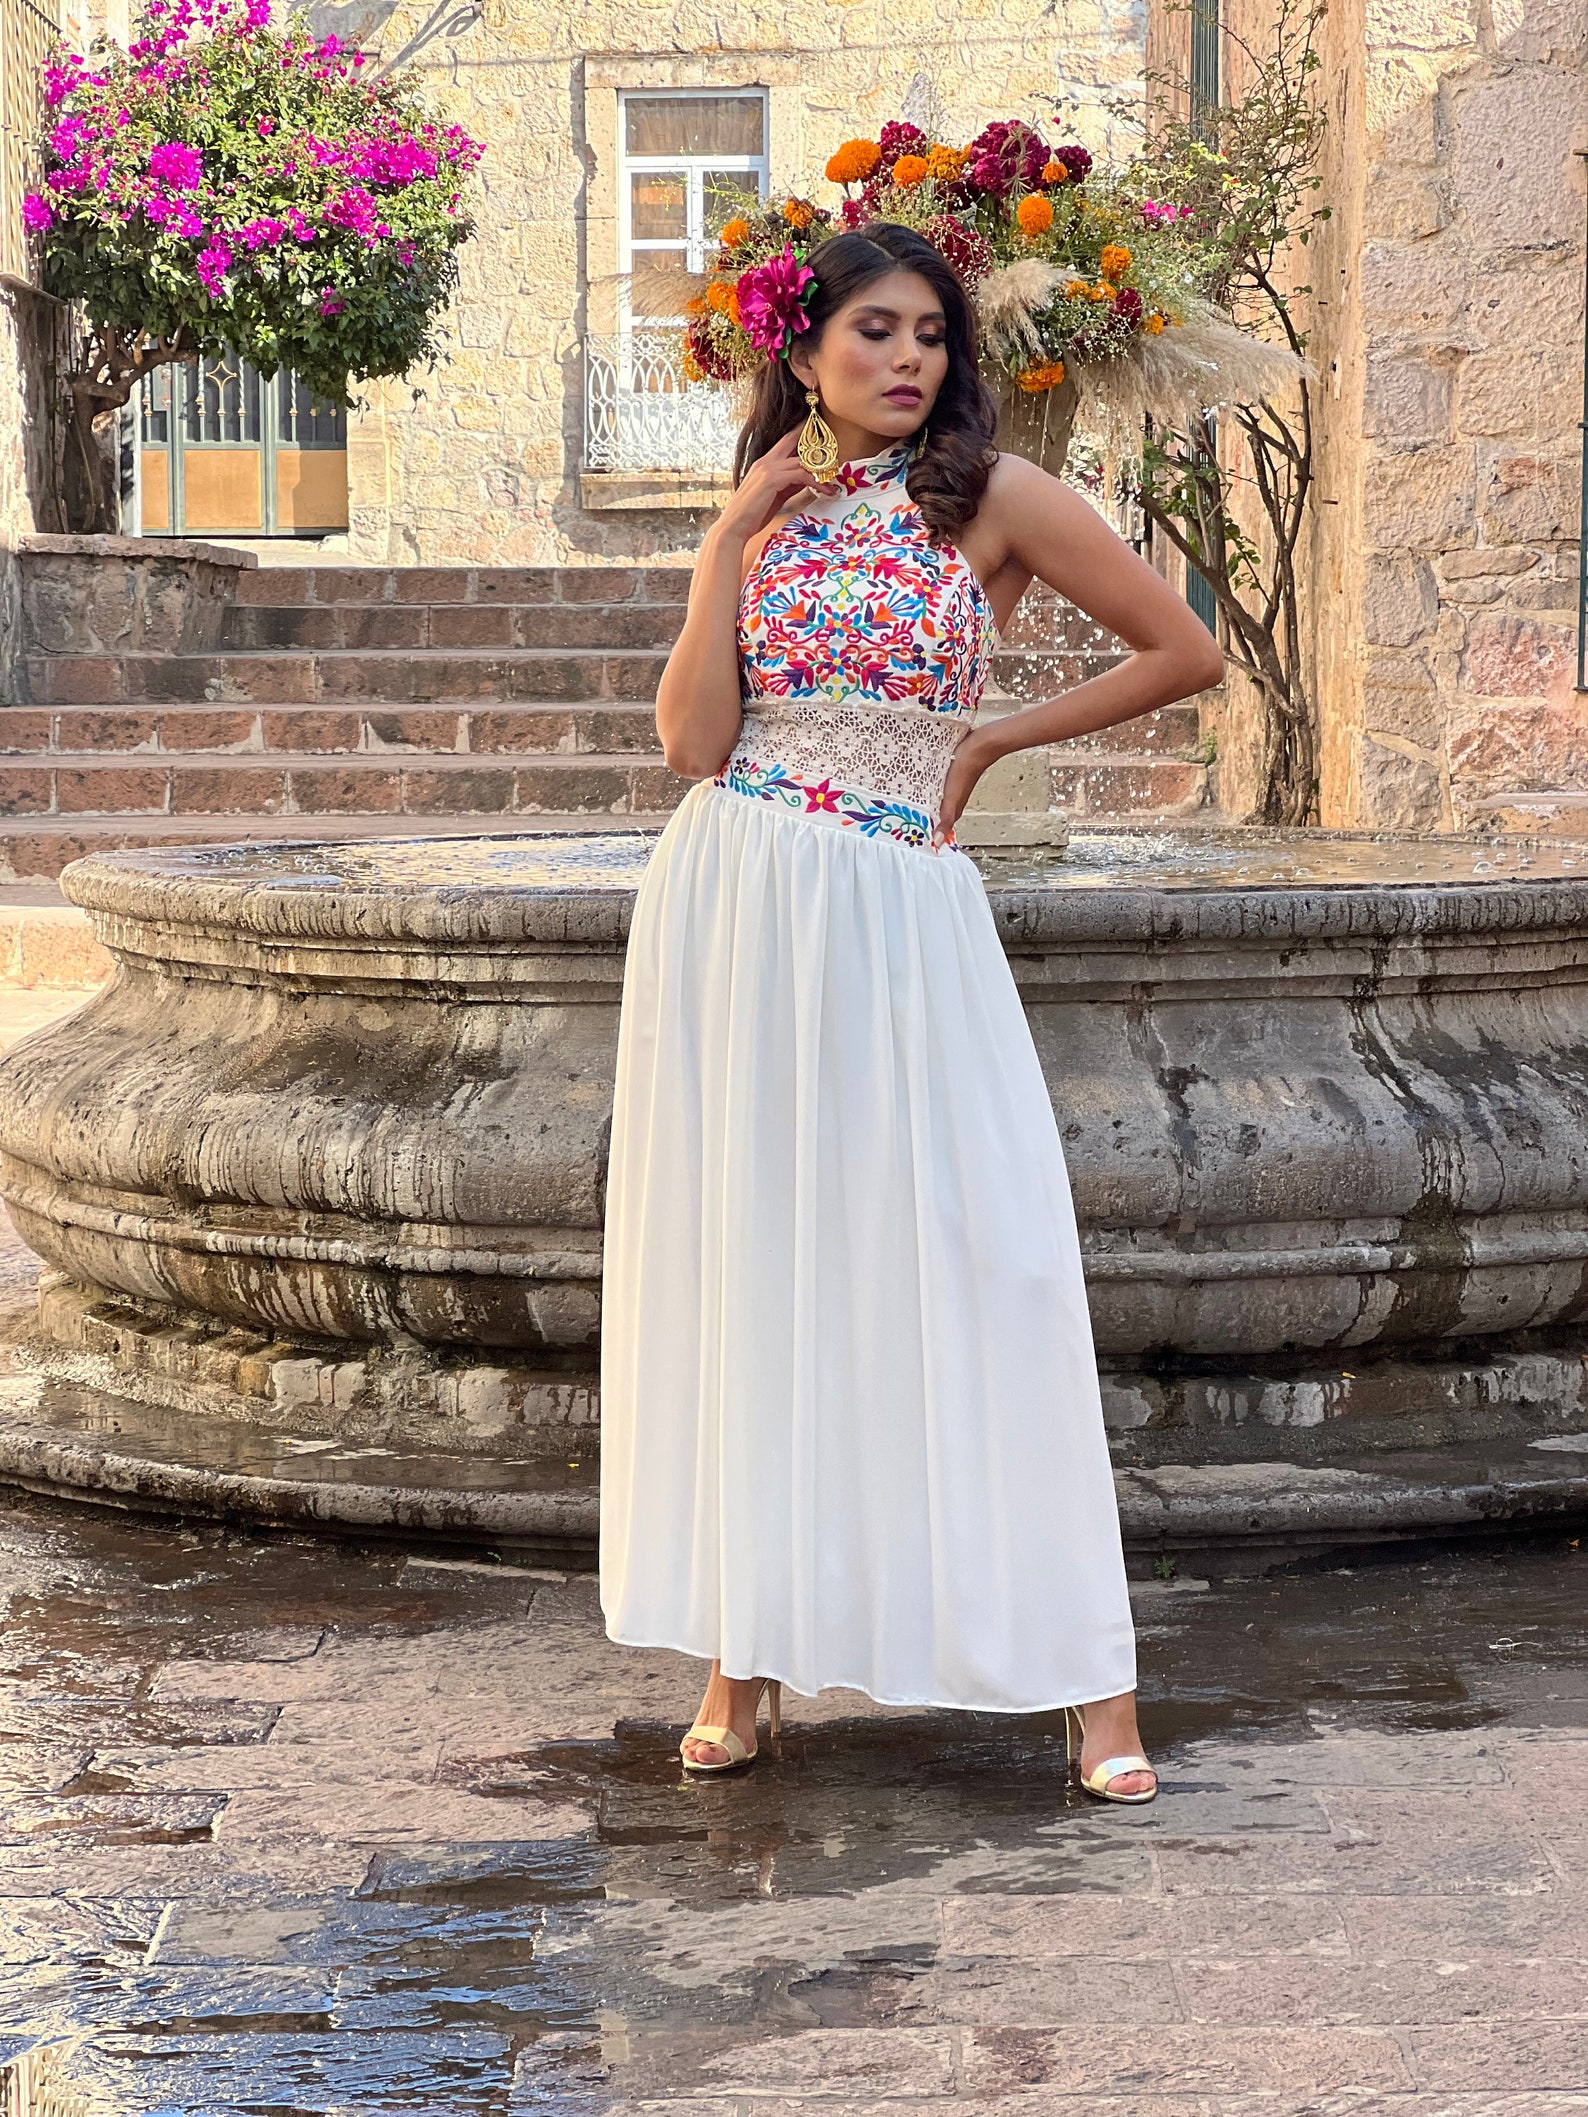 Floral Halter Dress. Floral Embroidered Dress. Latina Fashion - Etsy